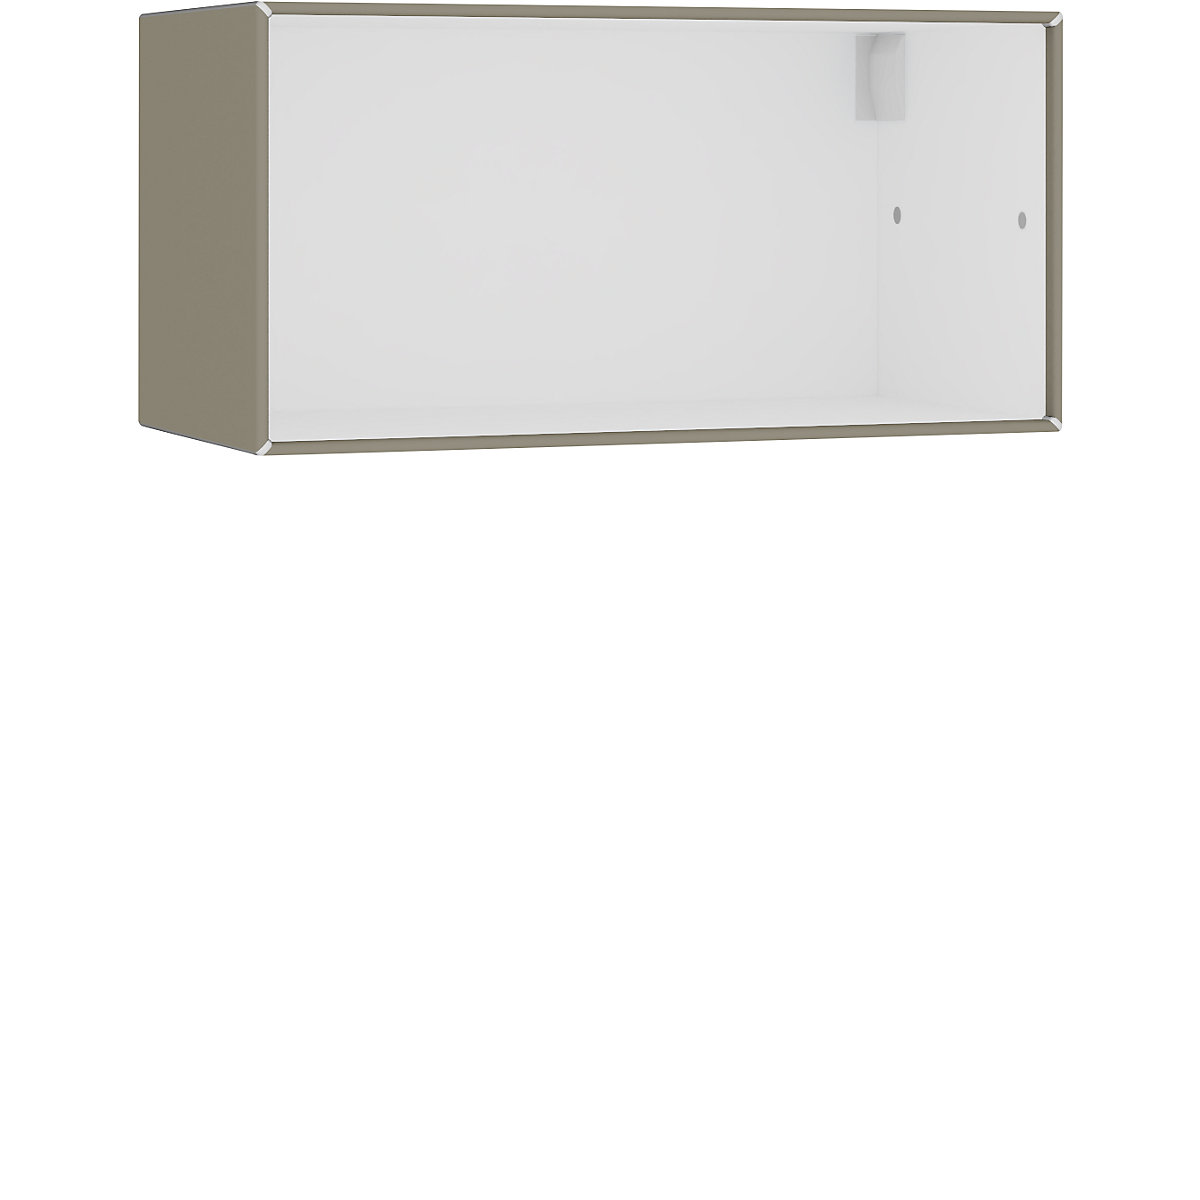 Odprta enojna viseča omarica – mauser, širina 770 mm, beige sive / čisto bele barve-4